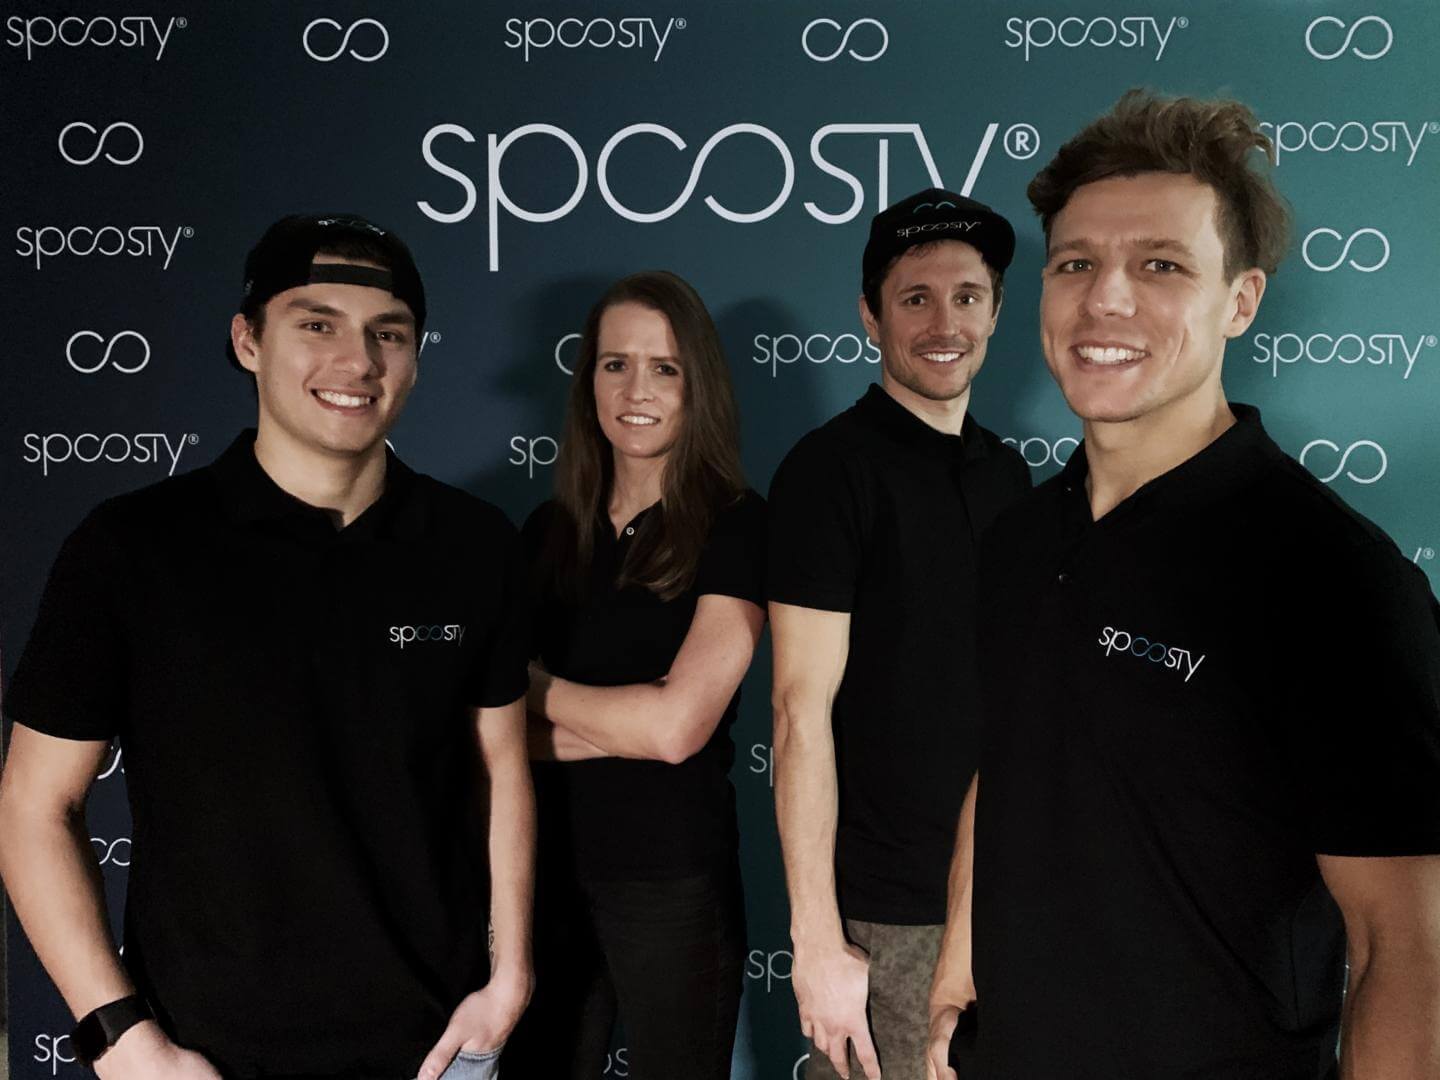 Spoosty Pro Tri Team